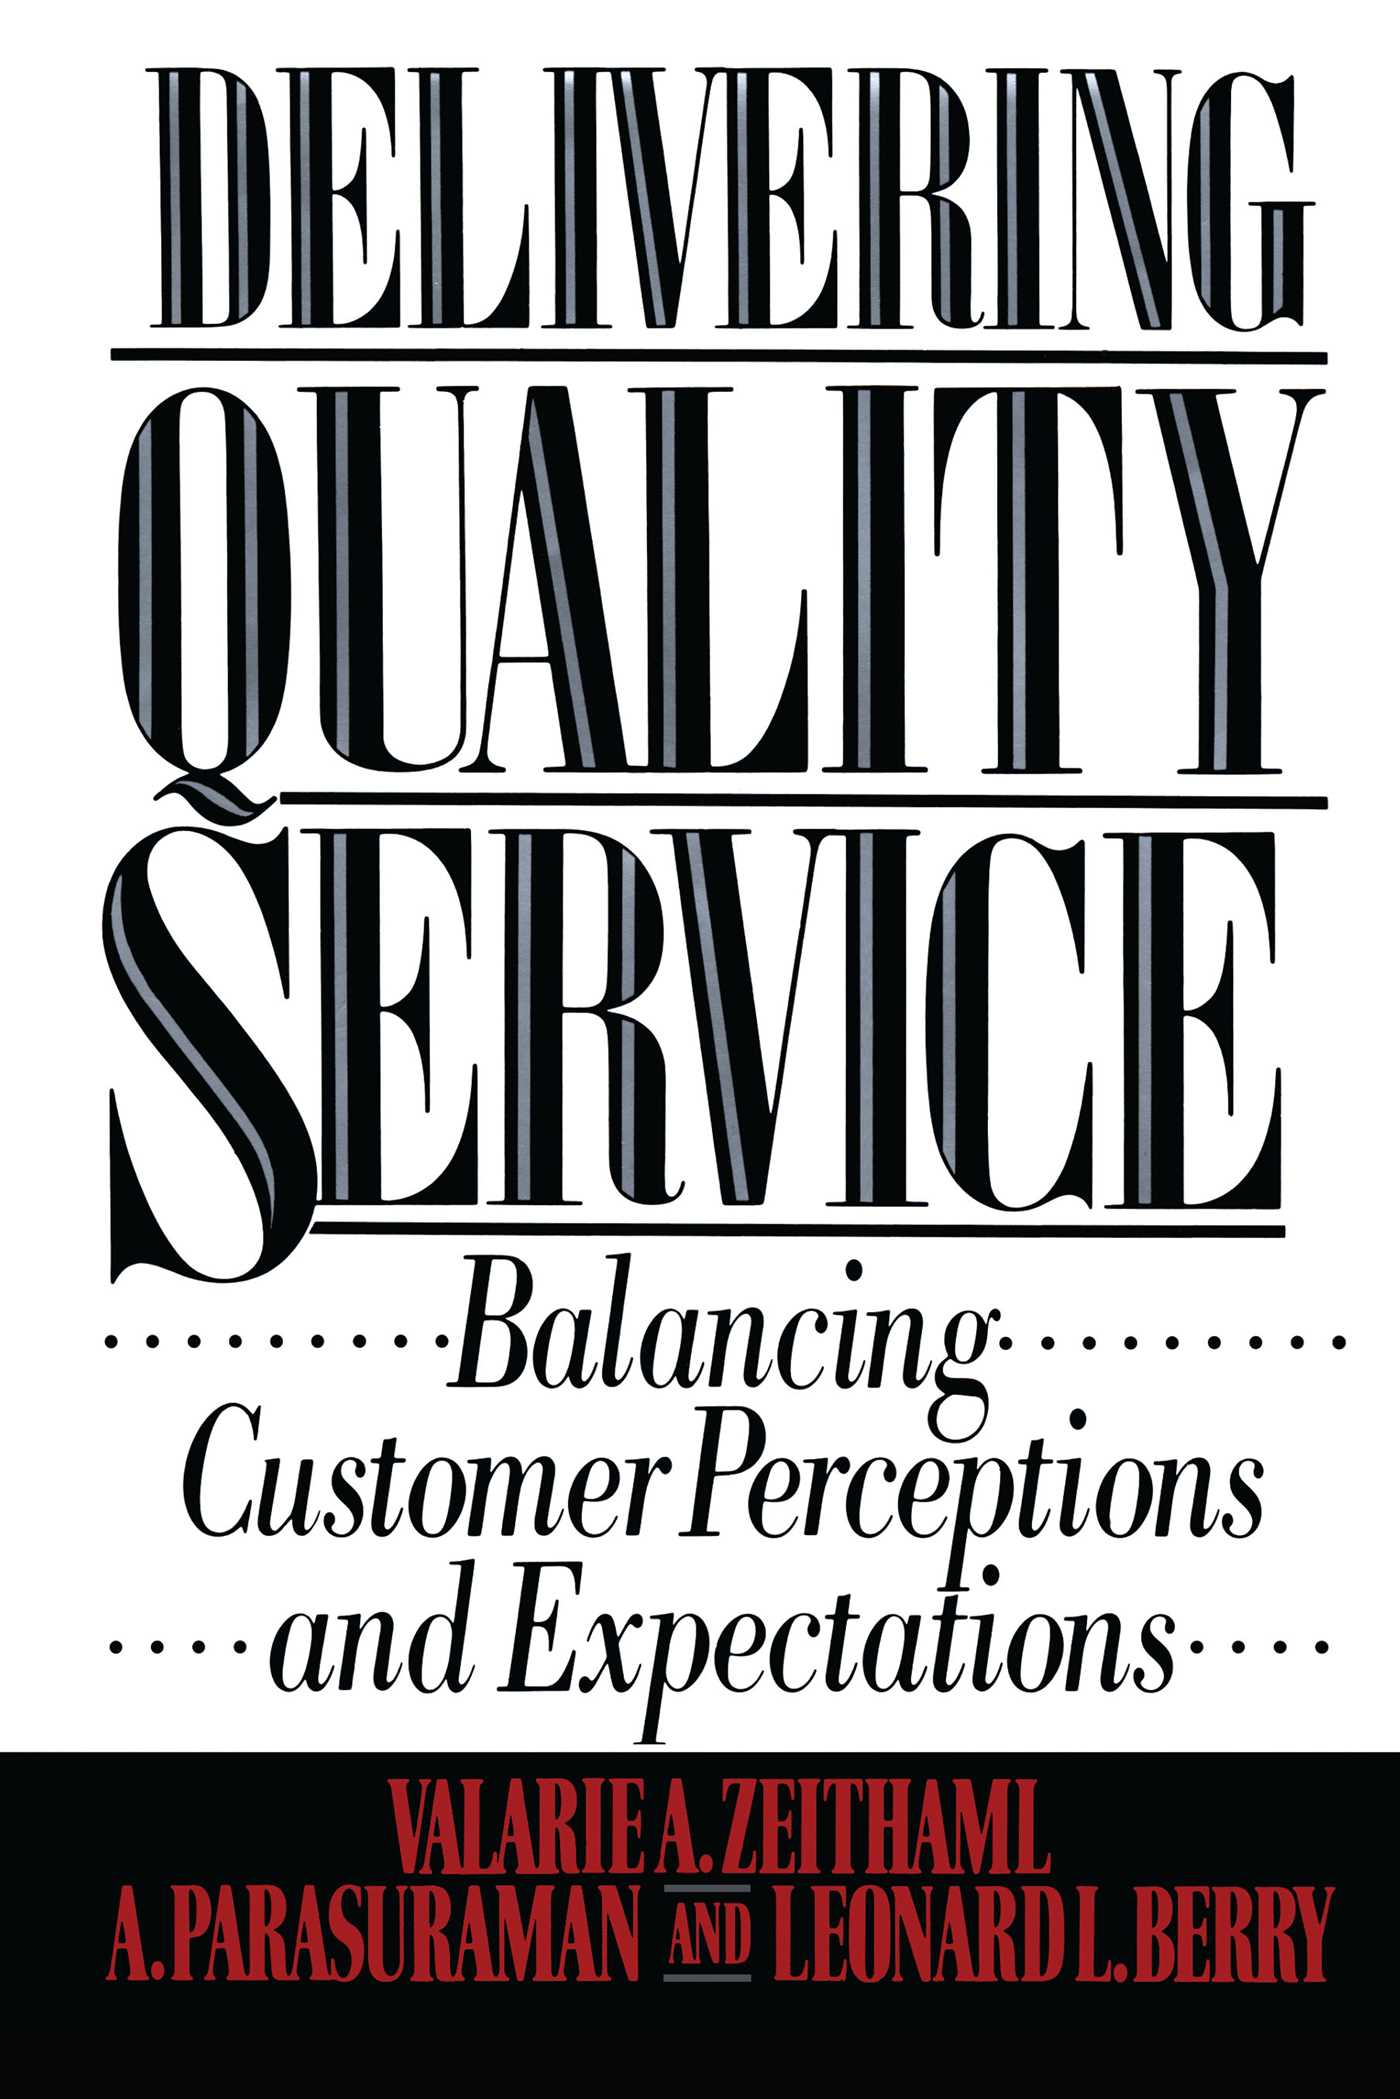 Delivering Quality Service - 10-14.99